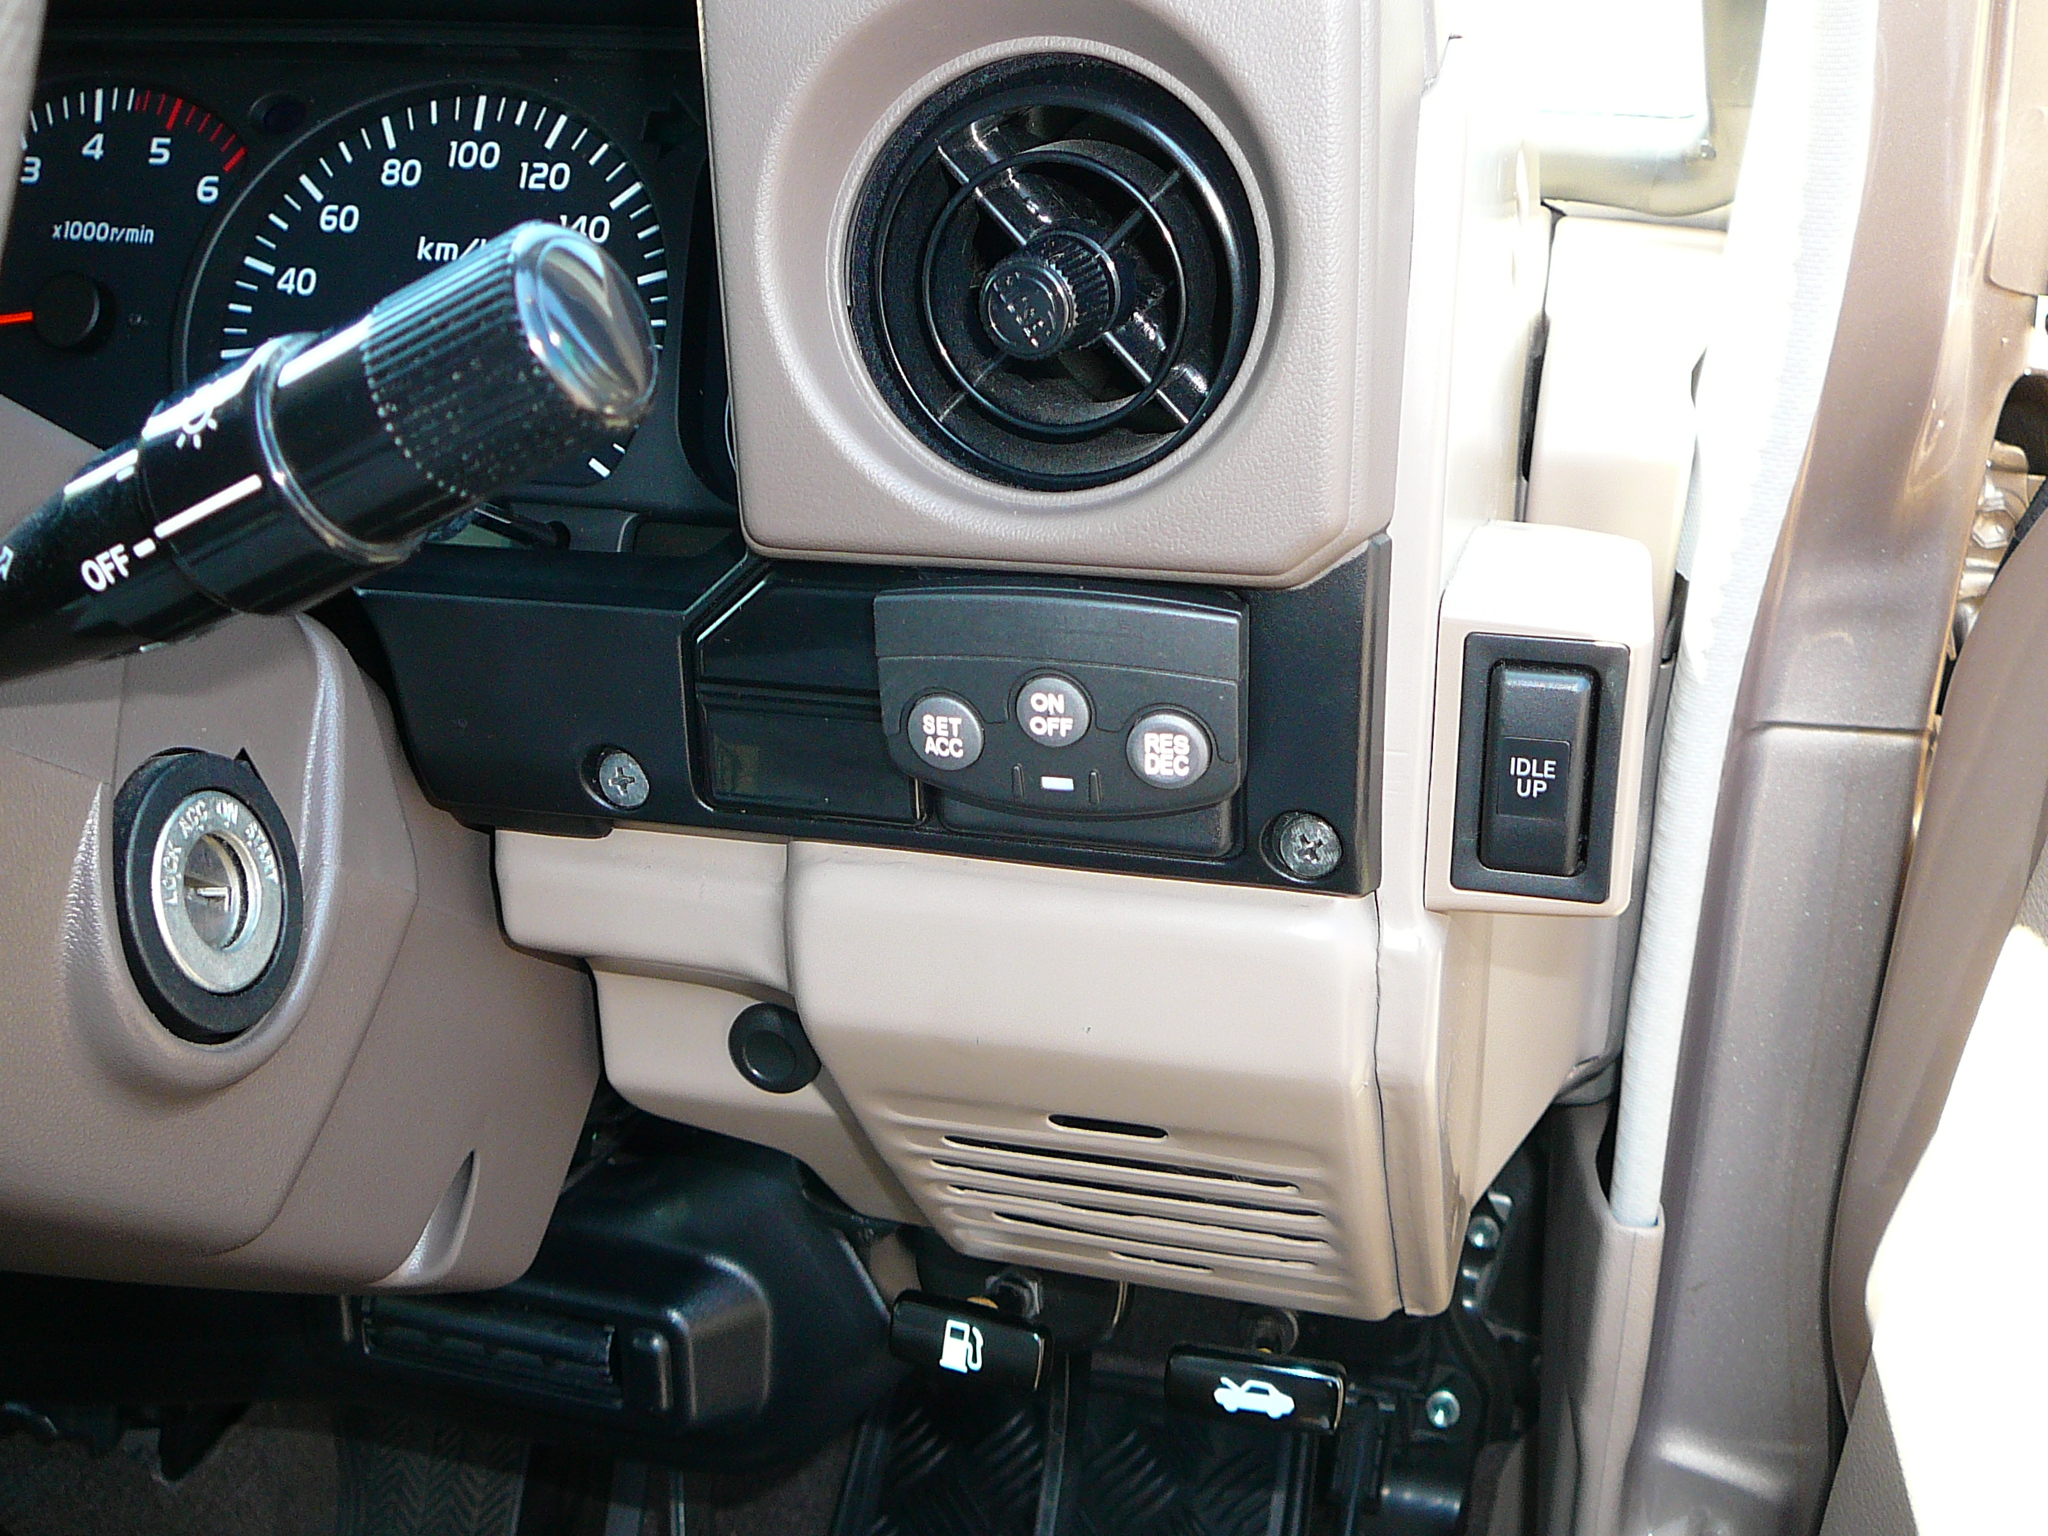 Toyota Landcruiser 70 Series, Pad mount Cruise Control